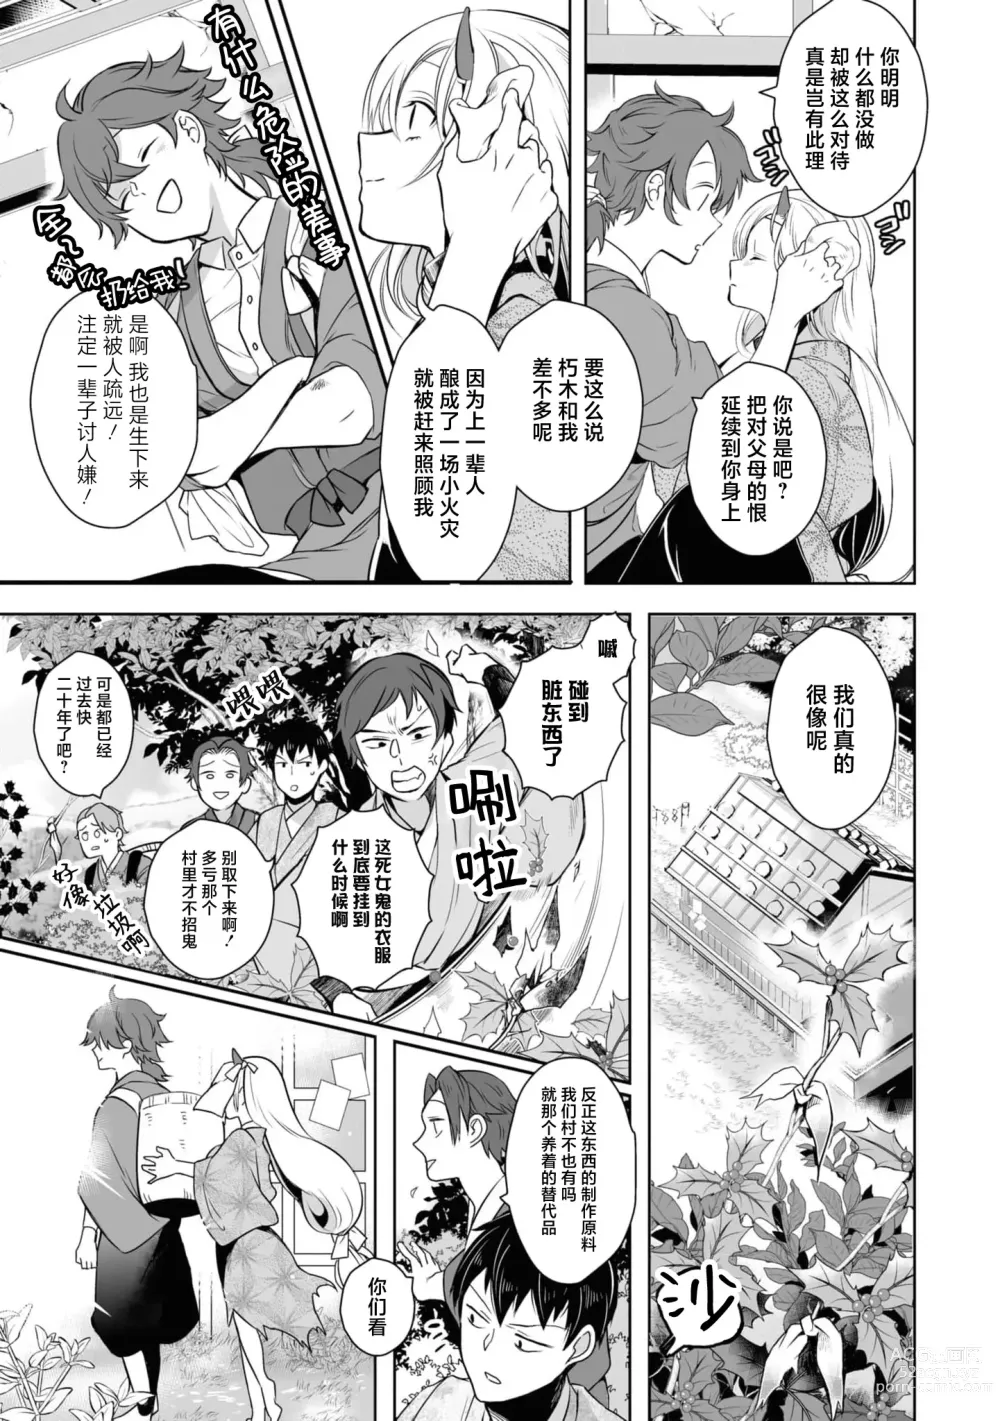 Page 9 of manga 大正异种婚物语